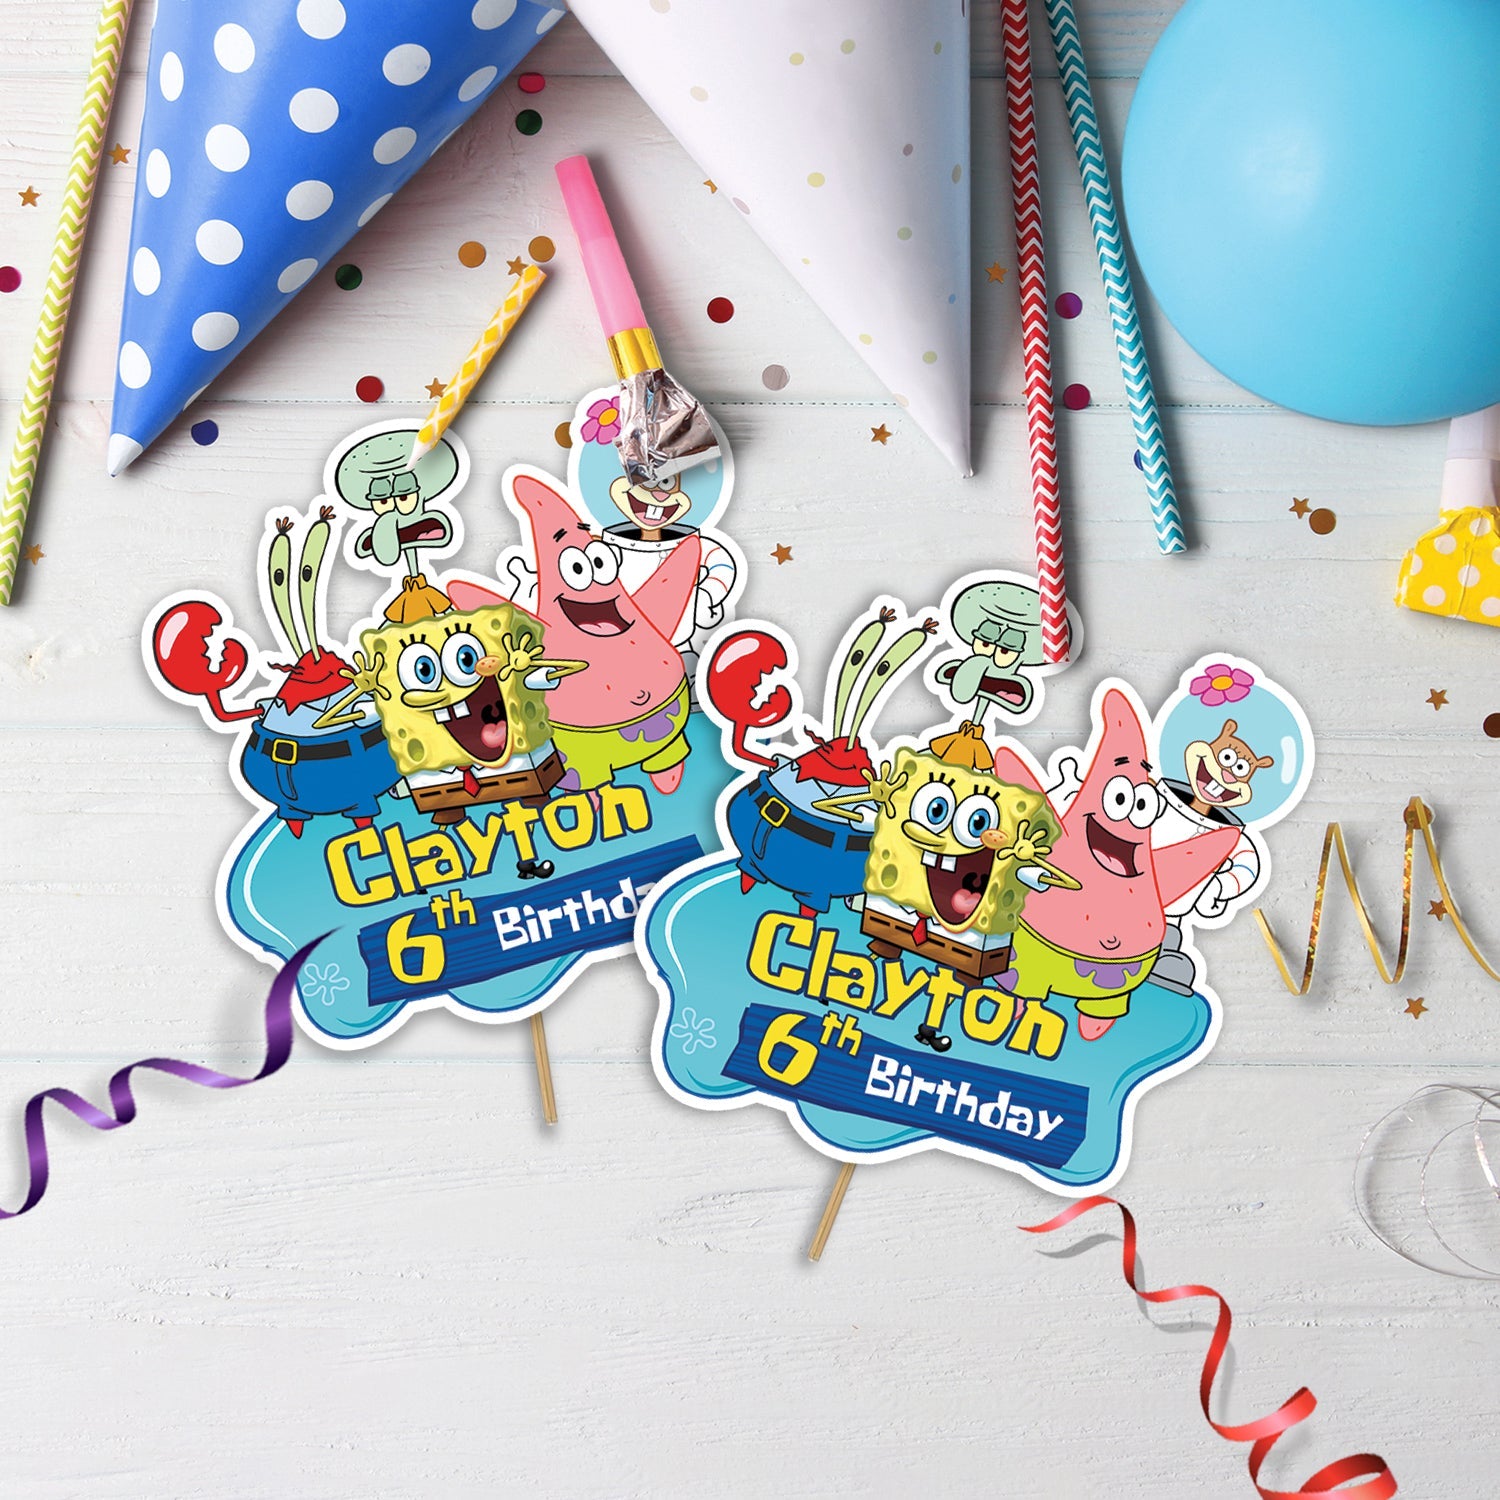 Spongebob SquarePants Birthday Decorations, Mr. Krabs Party Supplies, Patrick Star, Spongebob, Spongebob SVG